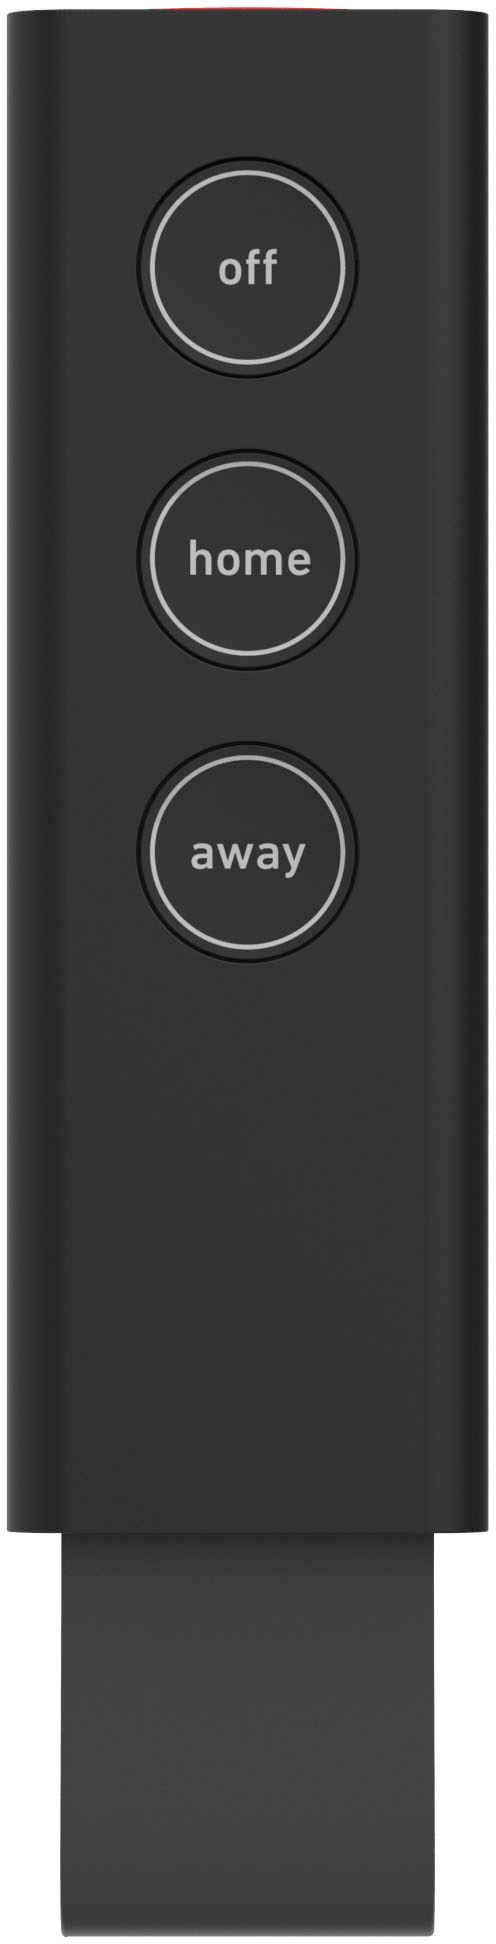 Key Fob Remote for SimpliSafe Systems - Black